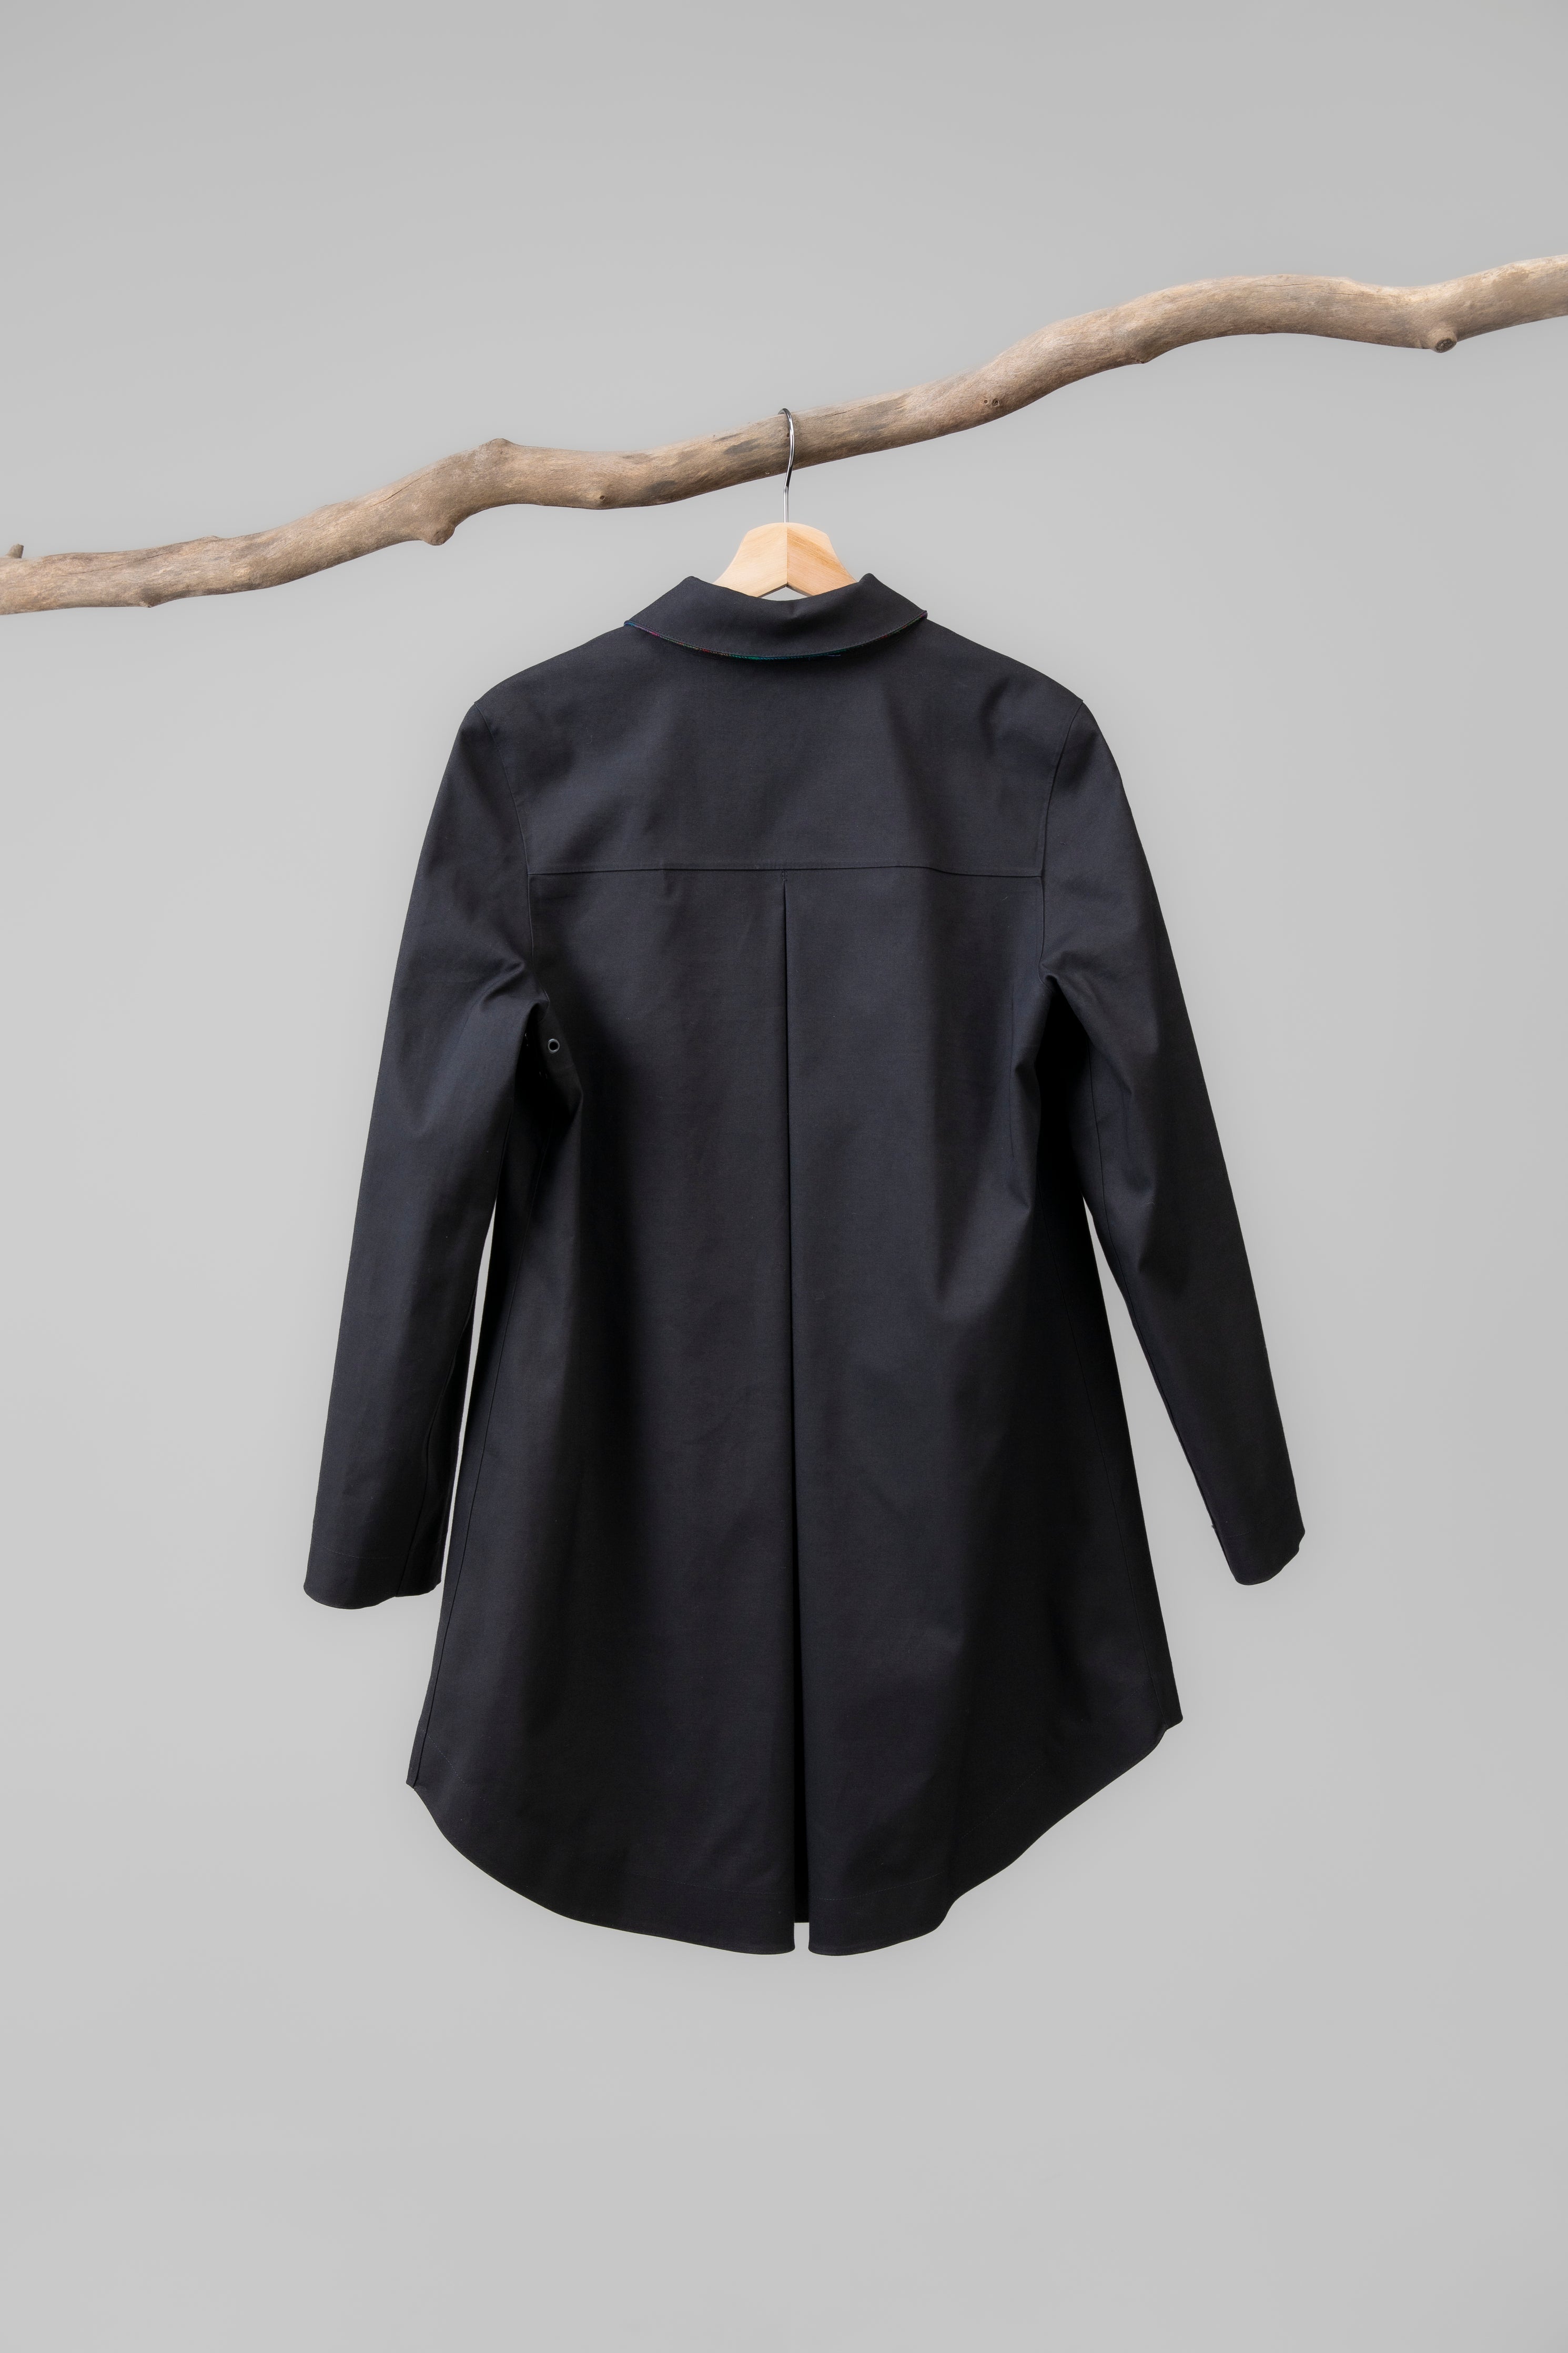 Article 9 pea coat - black Tailored Coats HANCOCK